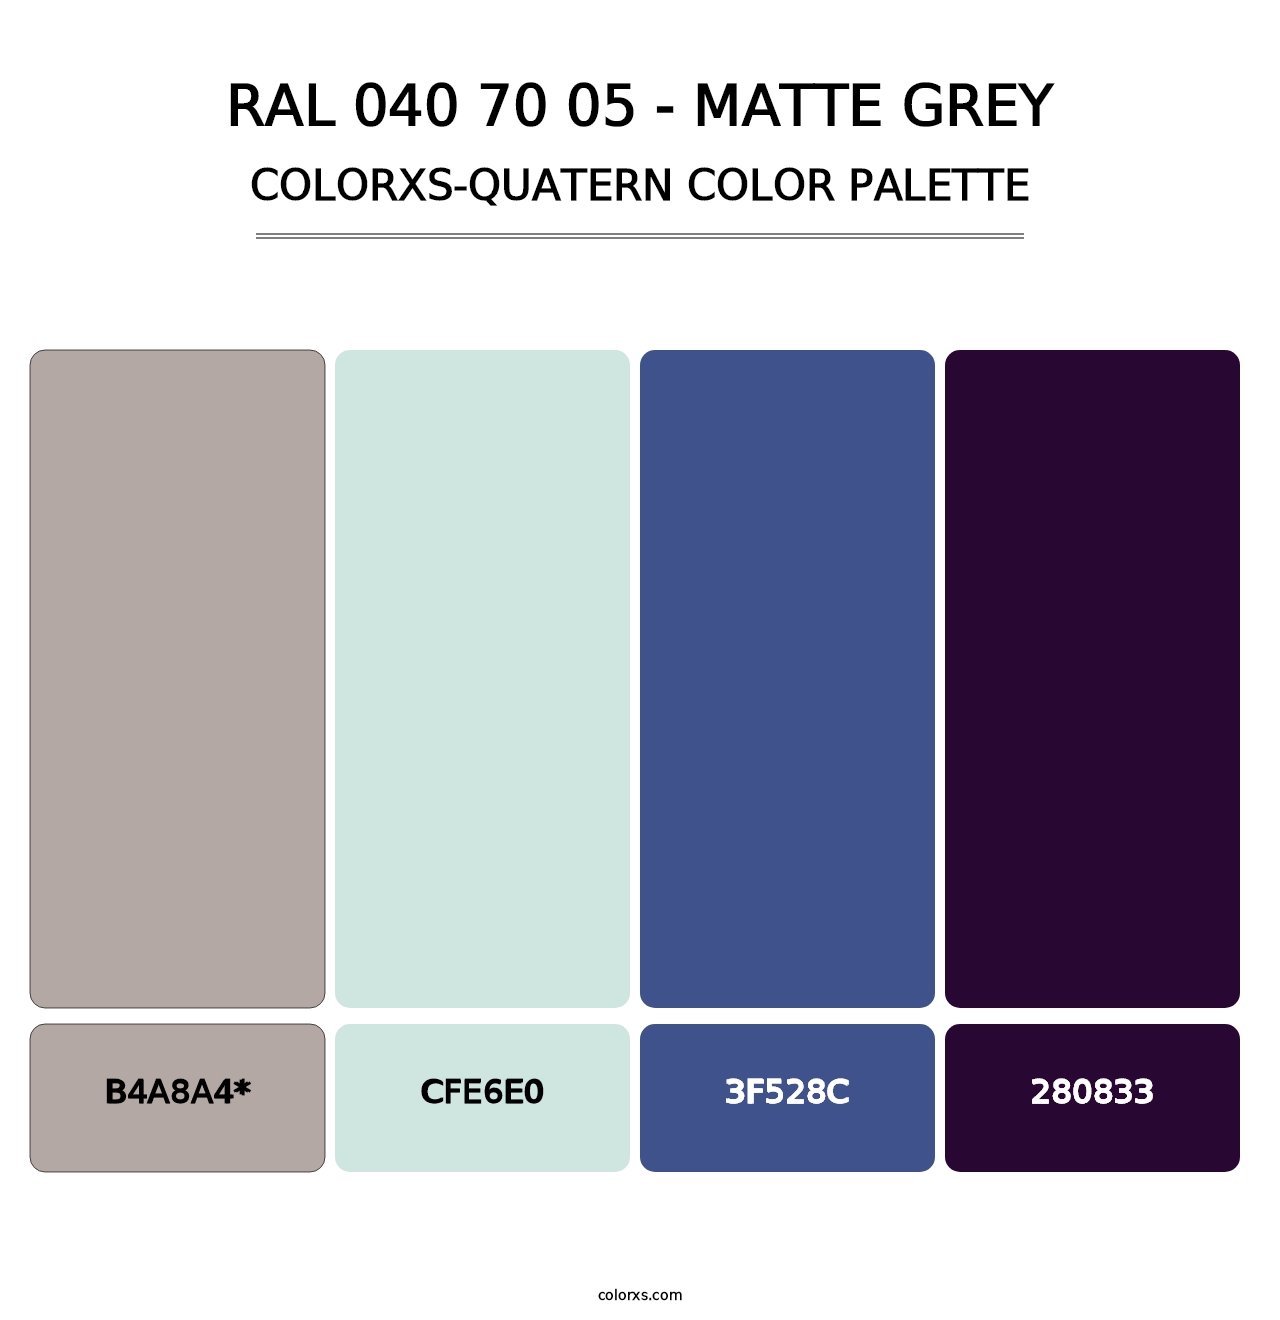 RAL 040 70 05 - Matte Grey - Colorxs Quatern Palette